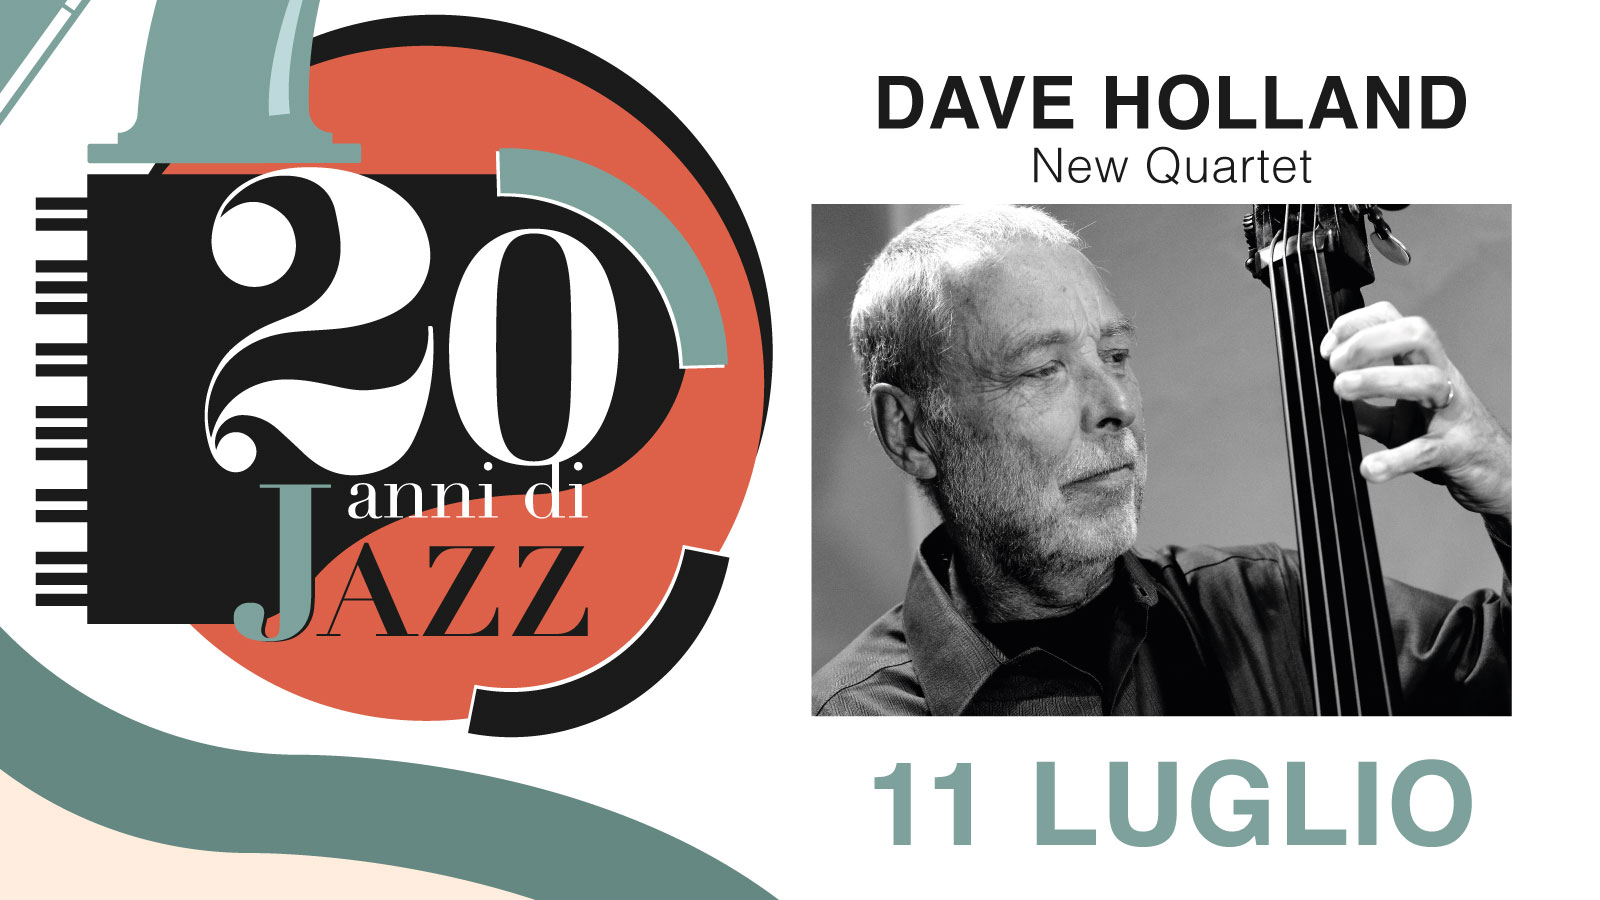 FESTIVAL JAZZONTHEROAD 2023 - DAVE HOLLAND “NEW QUARTET”